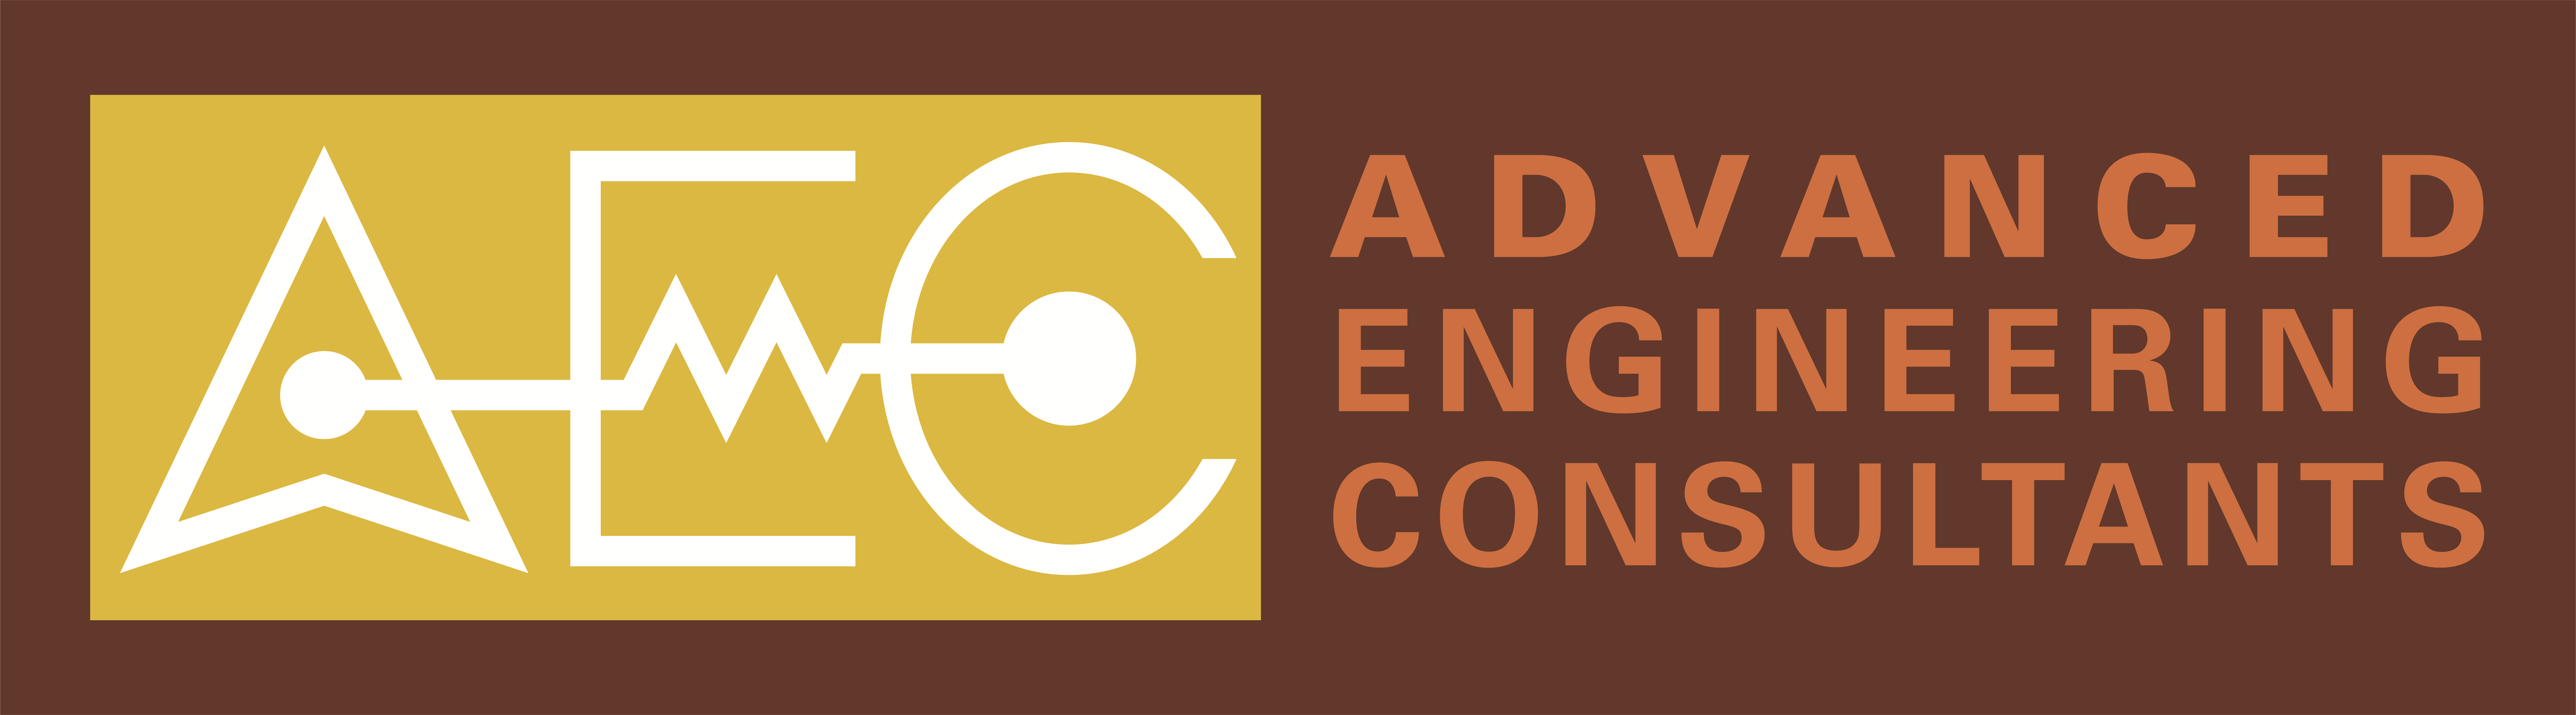 Advanced Engineering Consultants Company Logo